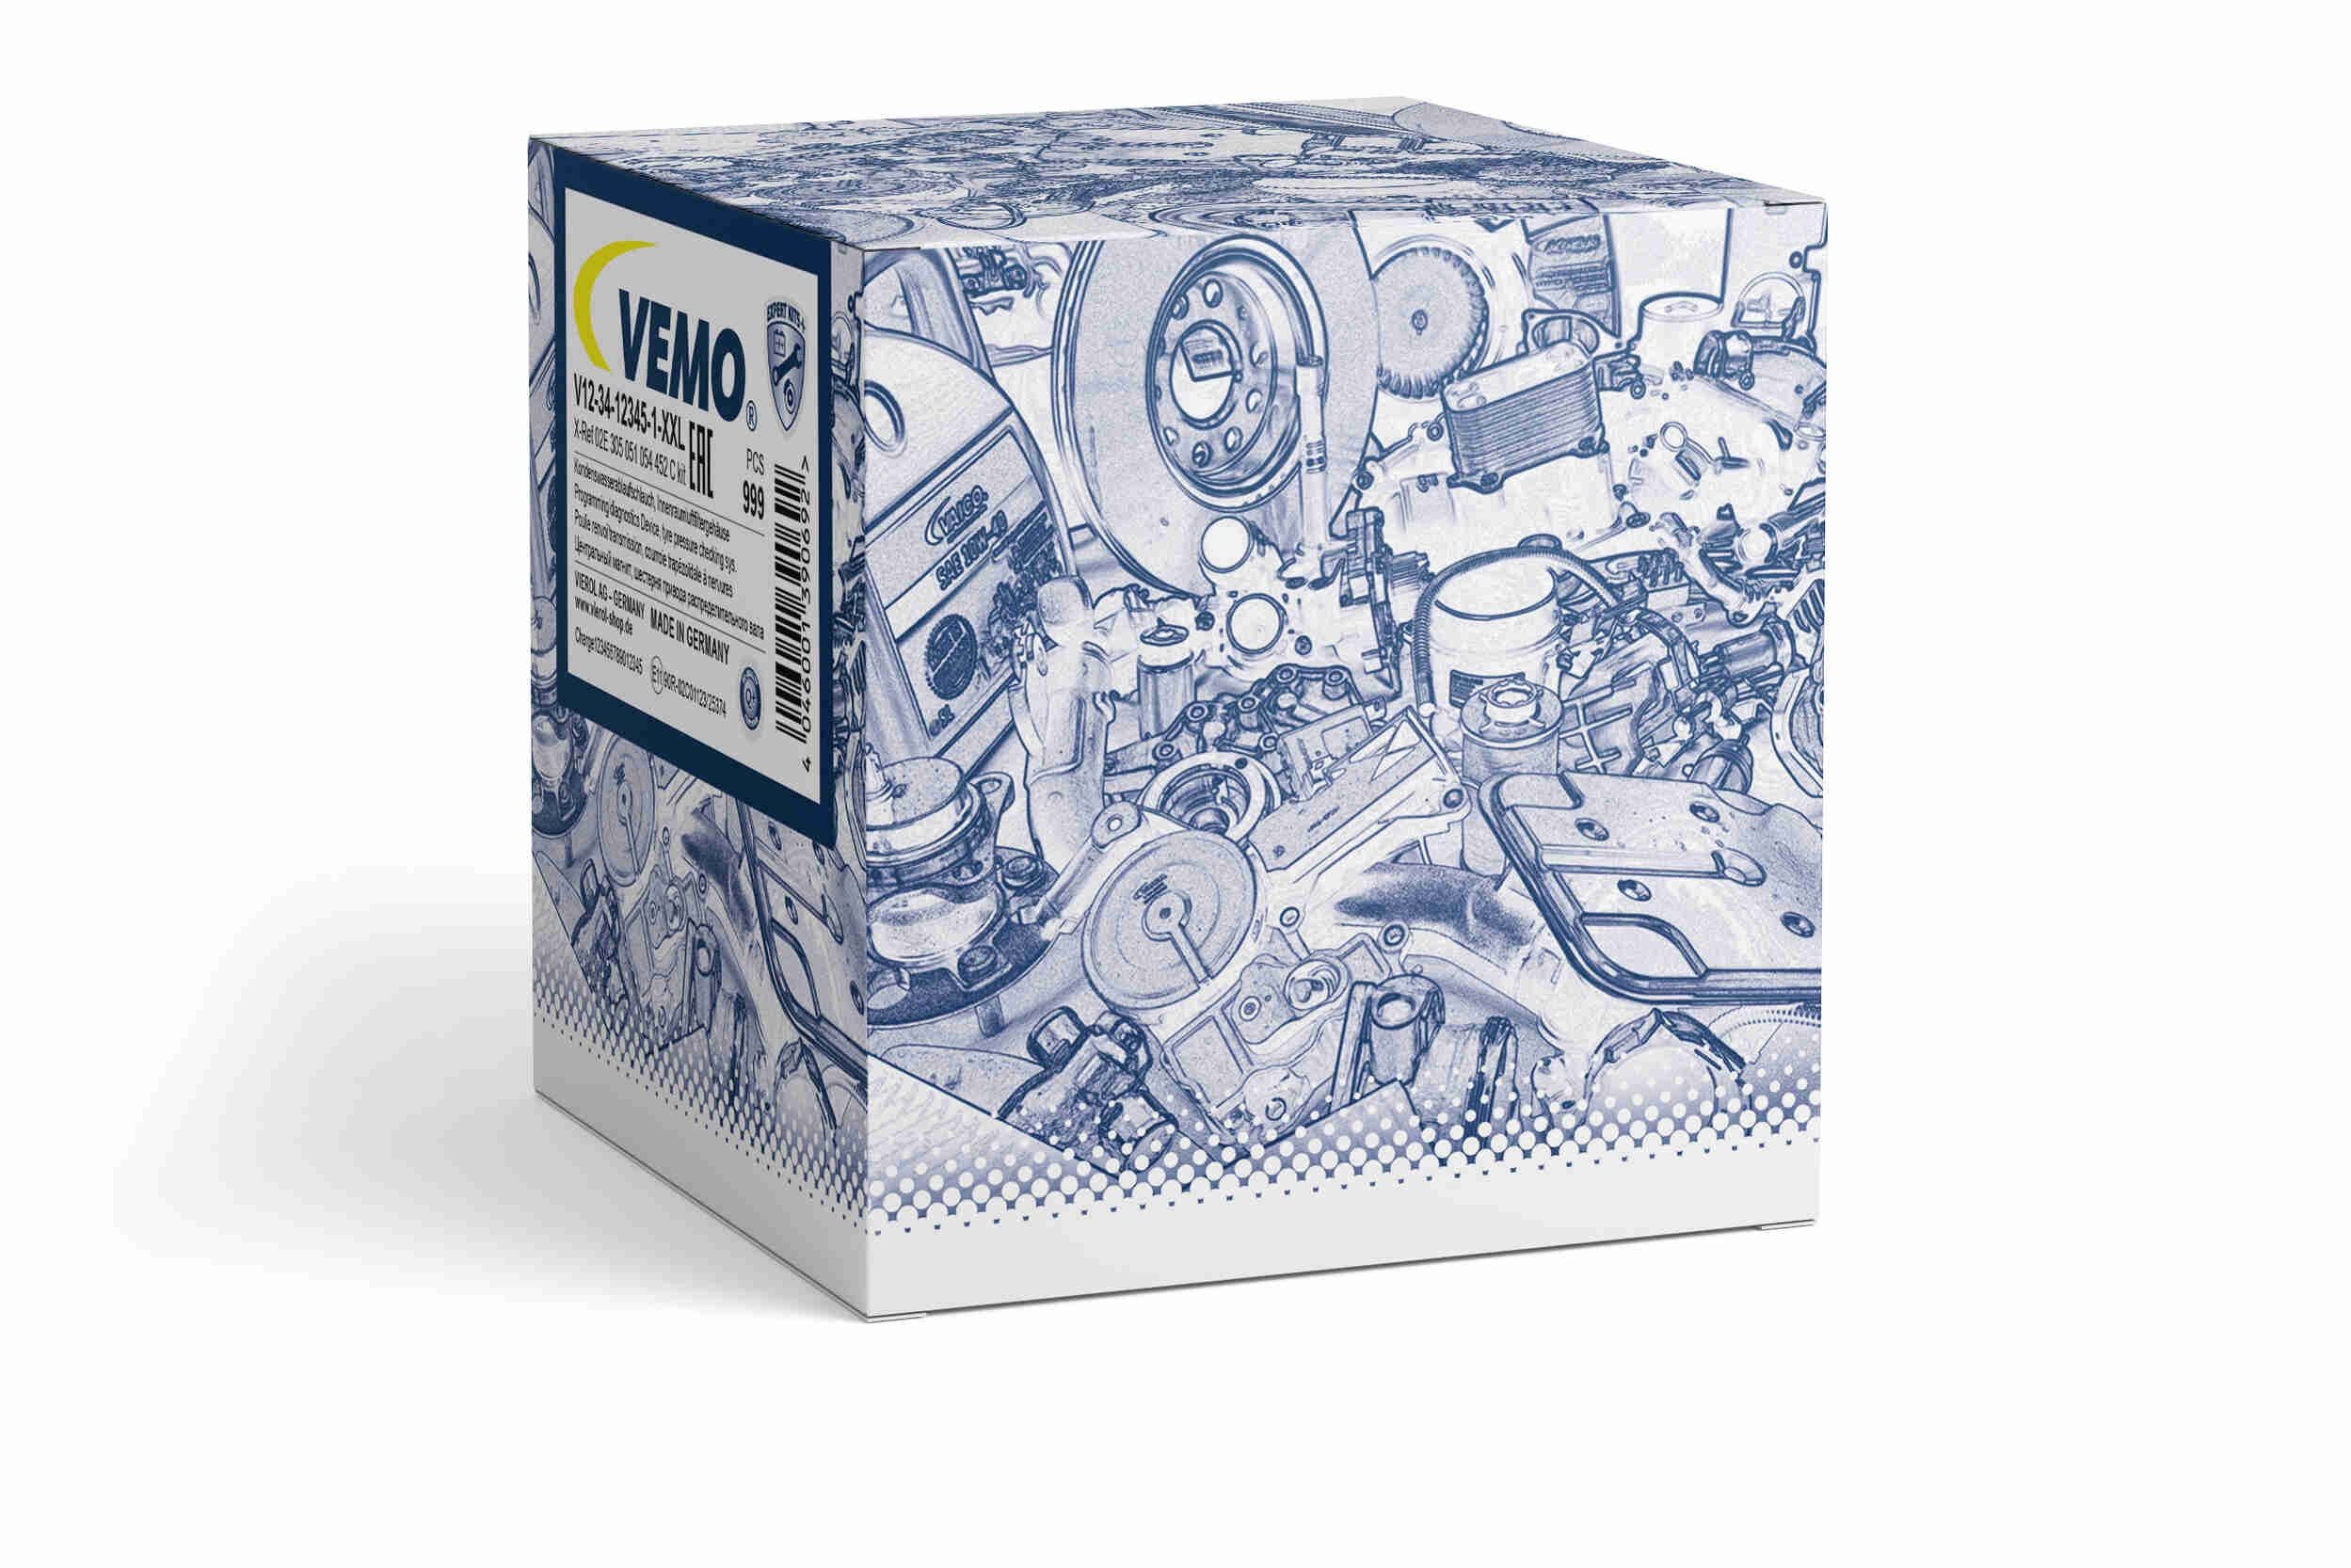 VEMO V51-03-0001 Heater fan motor Q+, original equipment manufacturer quality